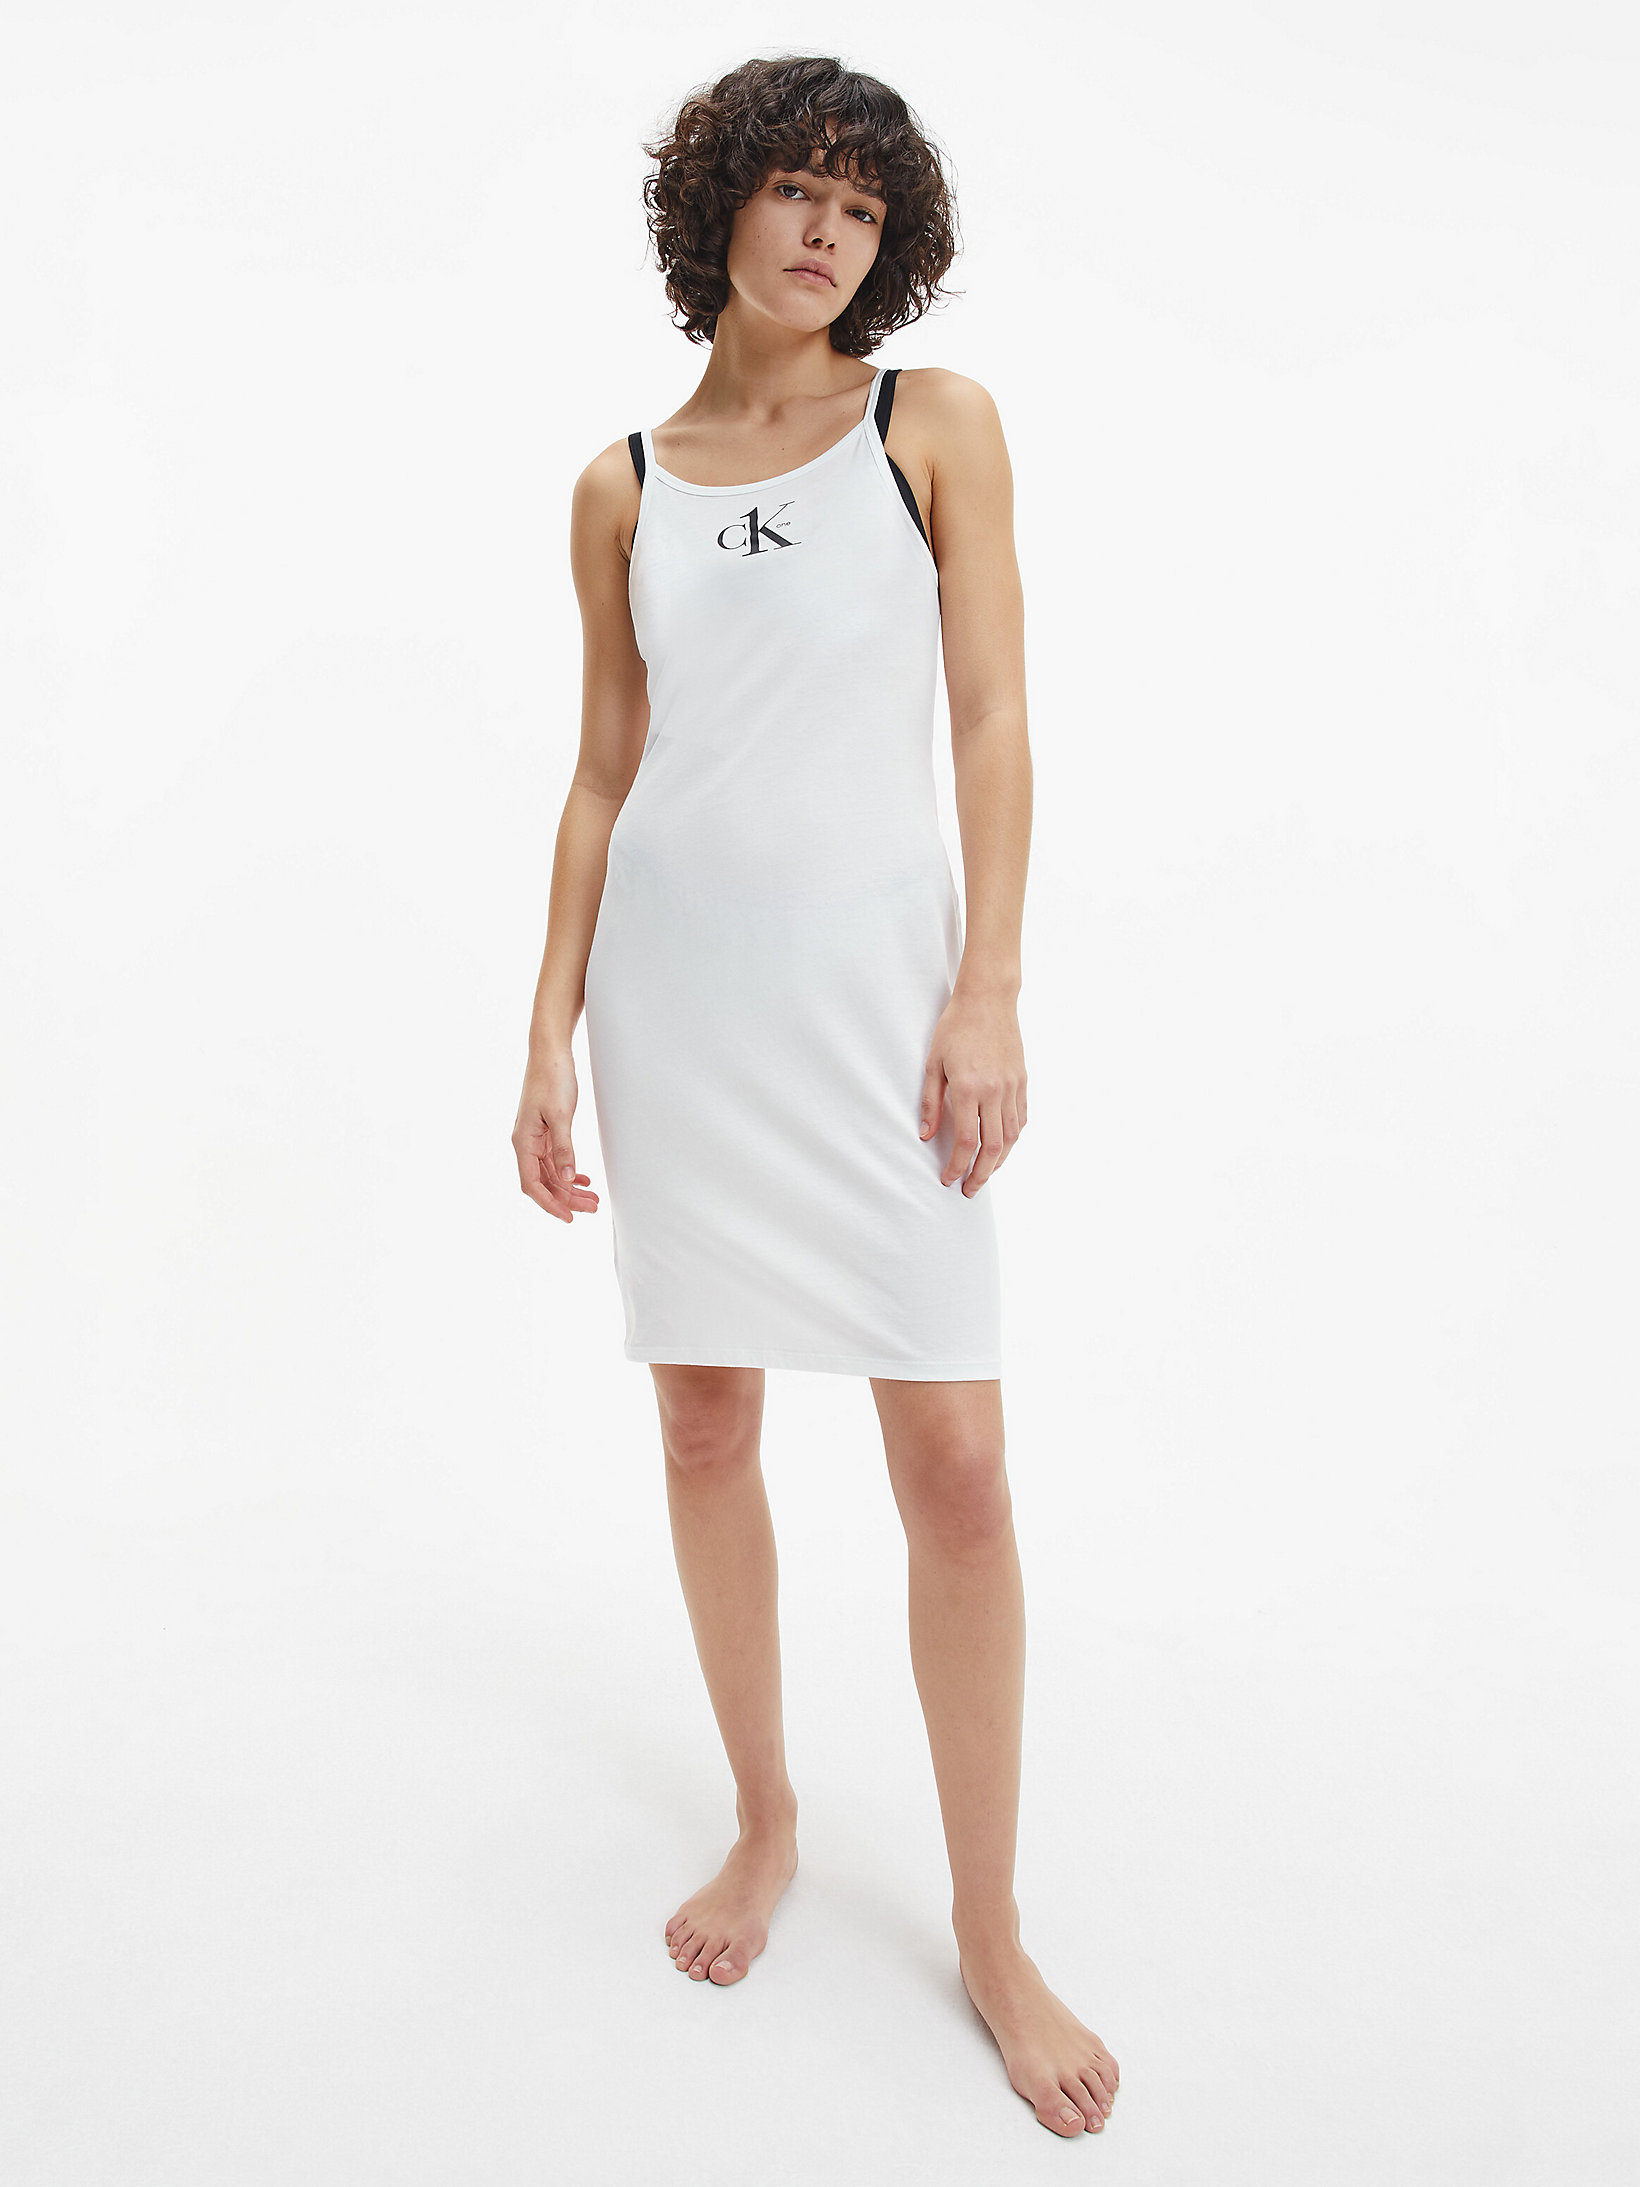 Pvh Classic White Organic Cotton Beach Dress - CK One undefined women Calvin Klein